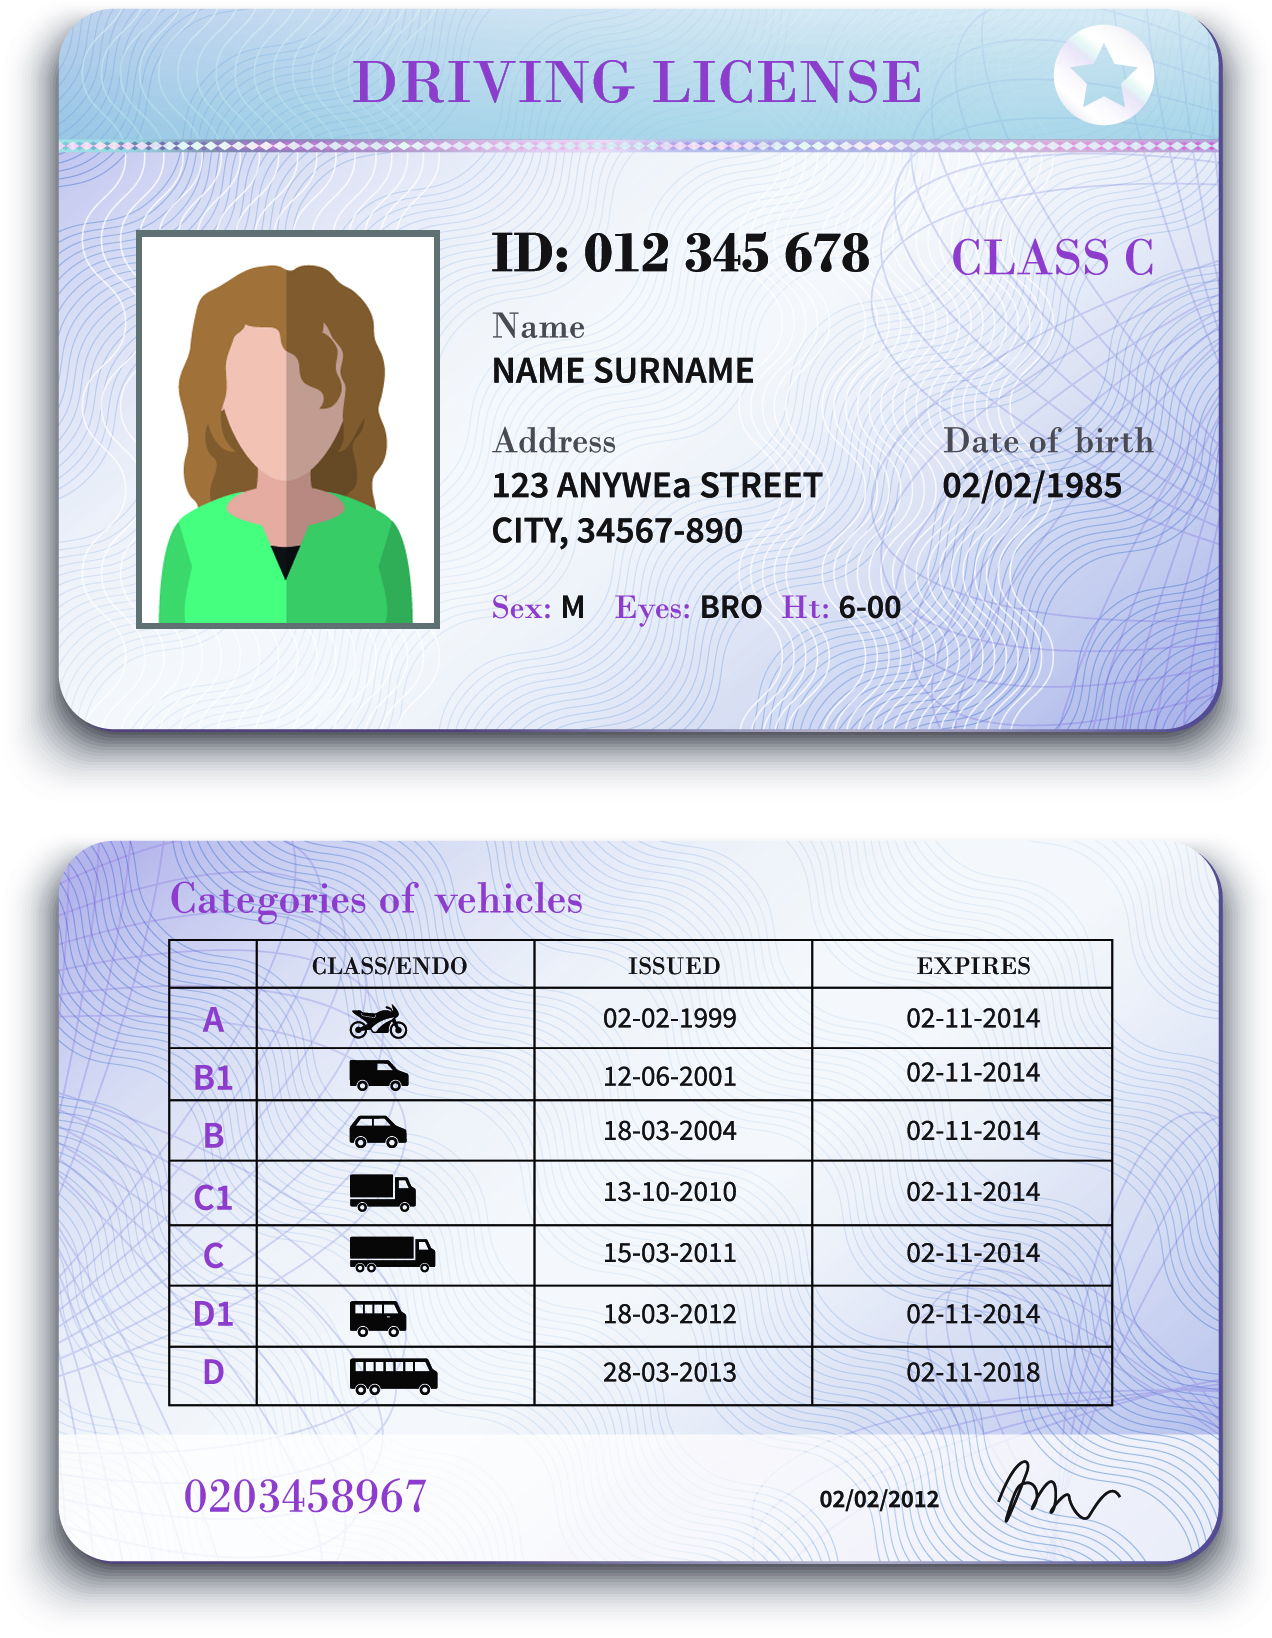 Driving Licence_Female (1).jpg